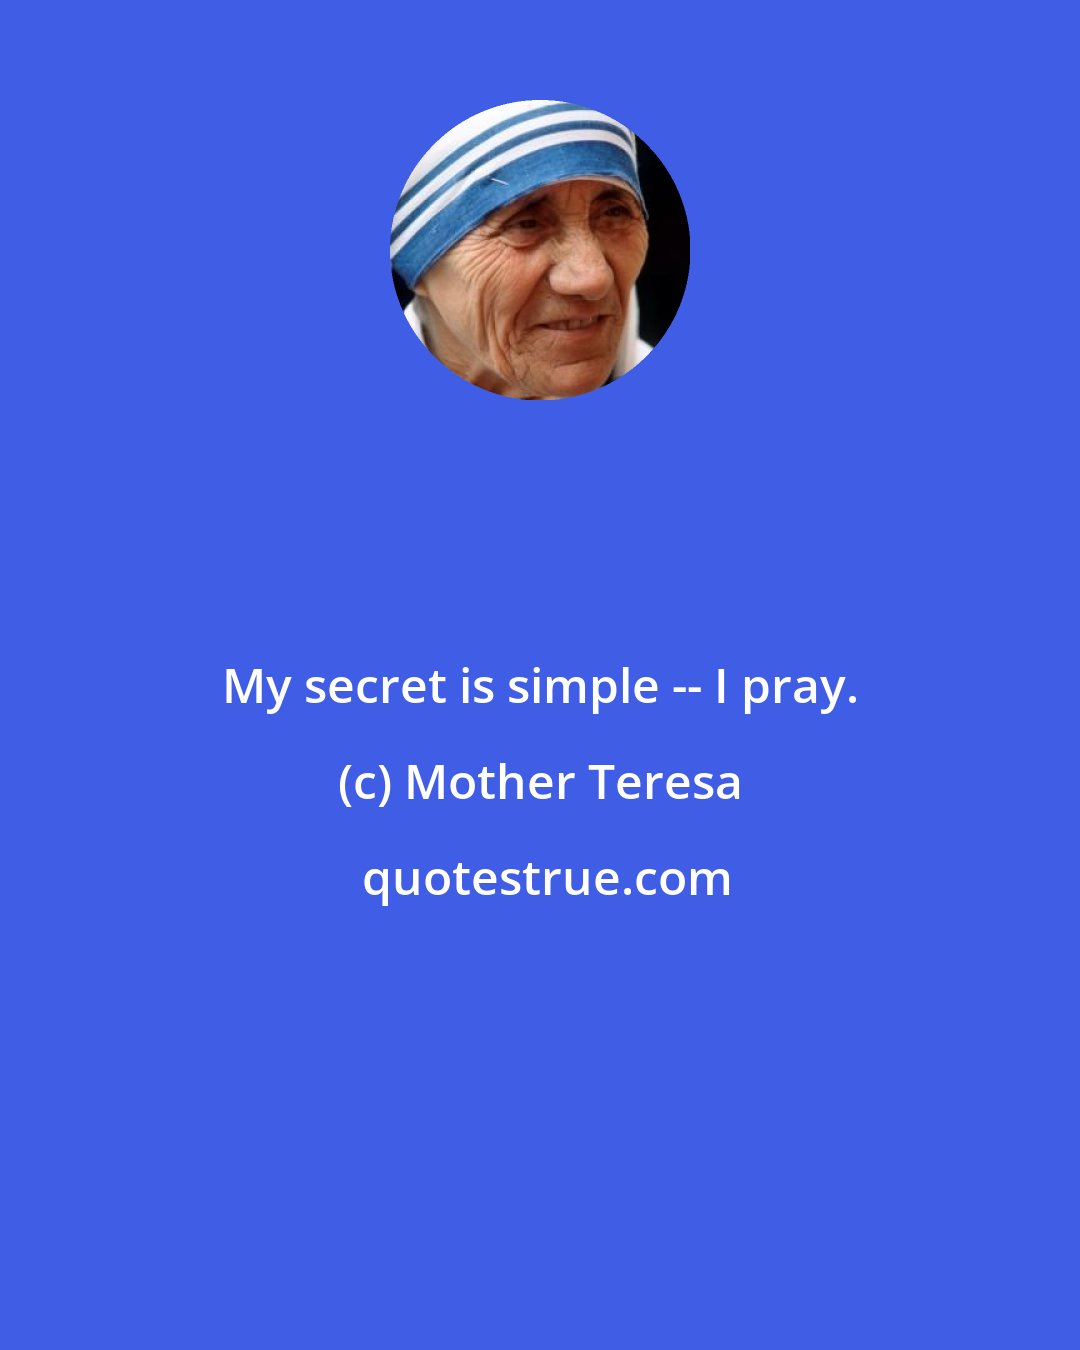 Mother Teresa: My secret is simple -- I pray.